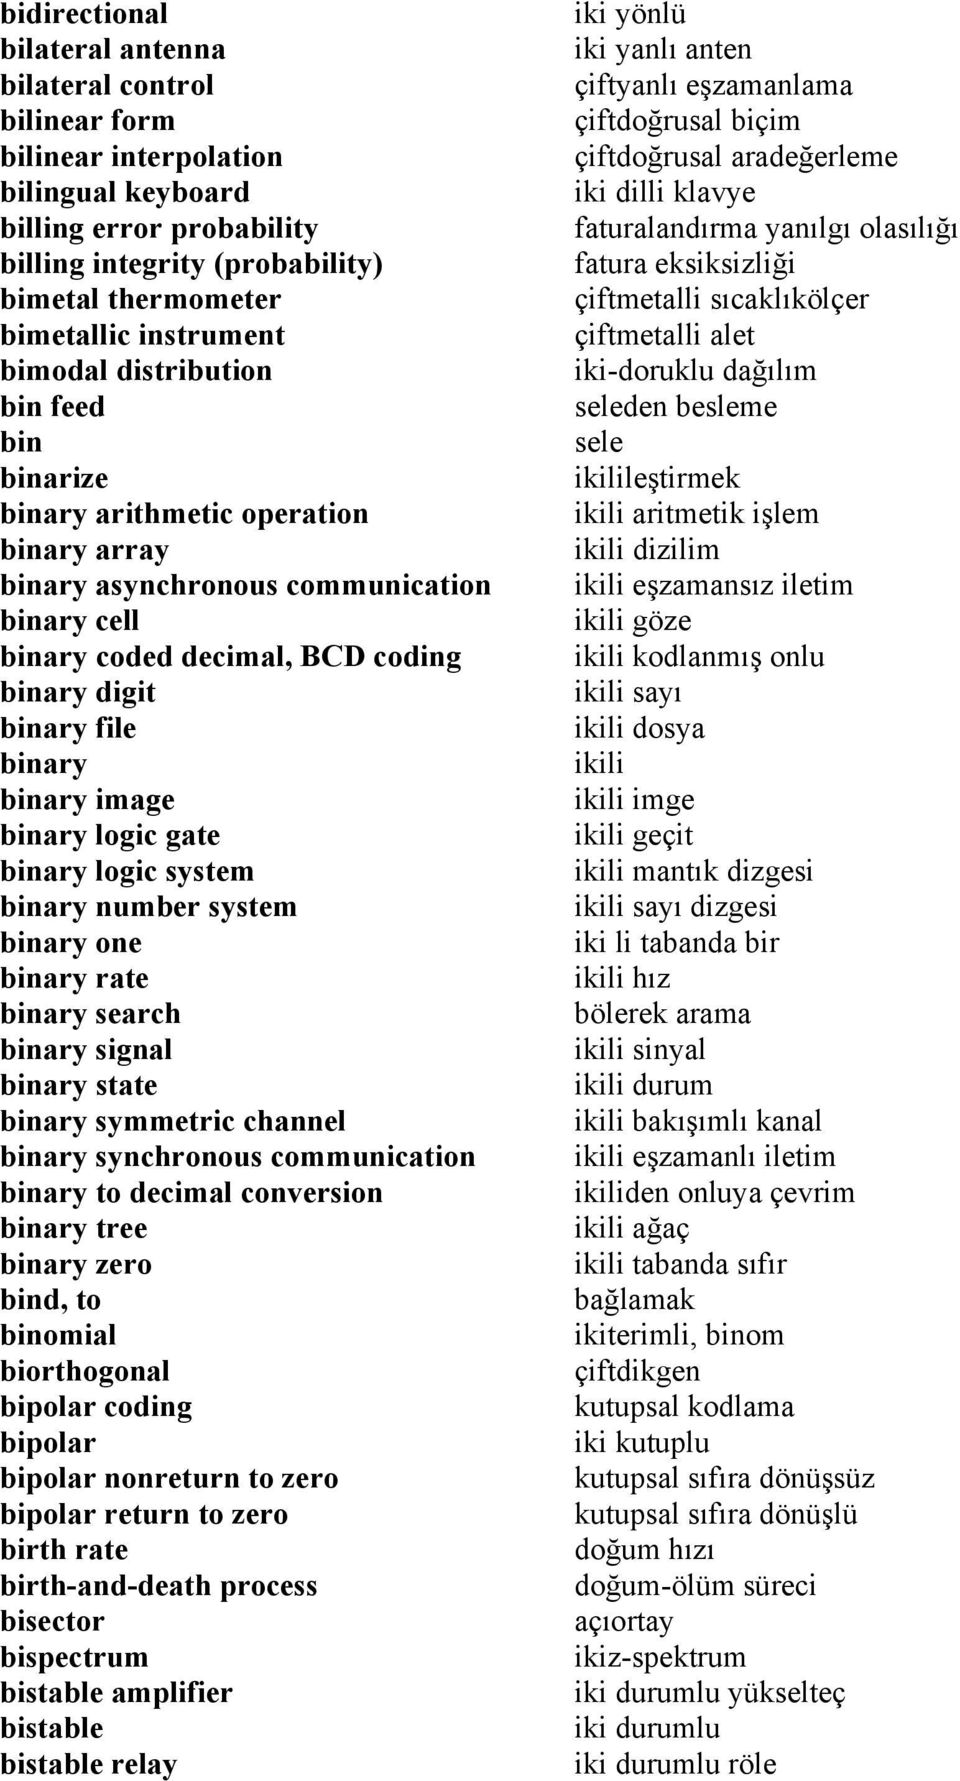 binary binary image binary logic gate binary logic system binary number system binary one binary rate binary search binary signal binary state binary symmetric channel binary synchronous